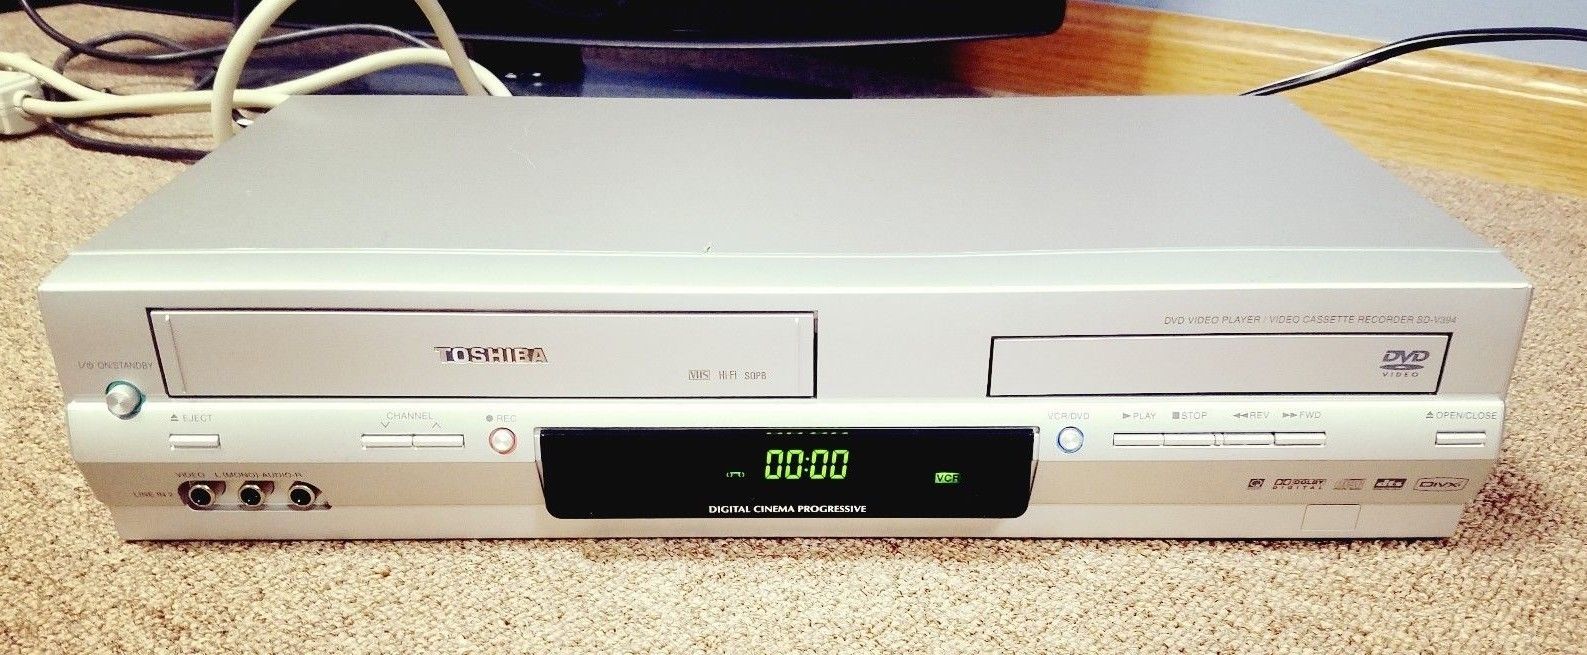 Toshiba DVR VHS Combo SD-V394